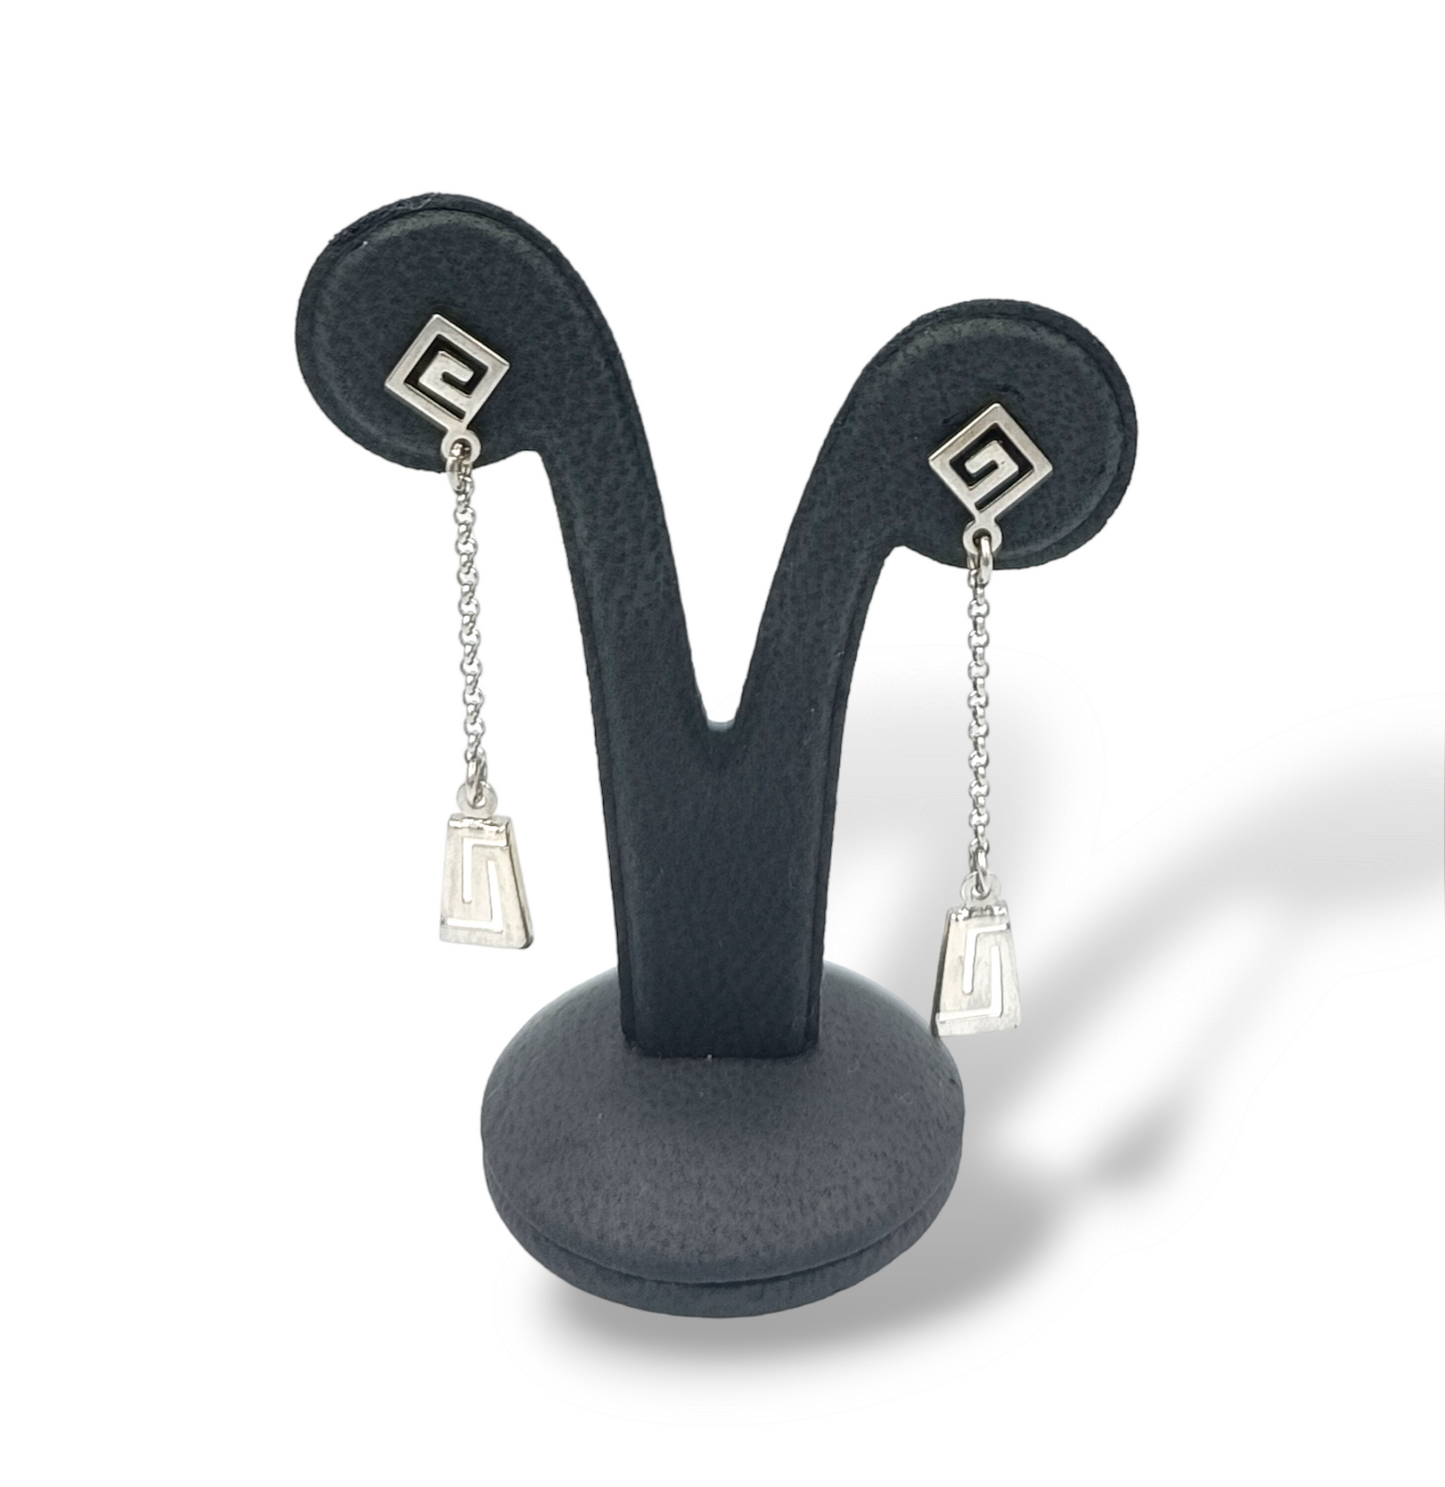 Silver Meander design earrings